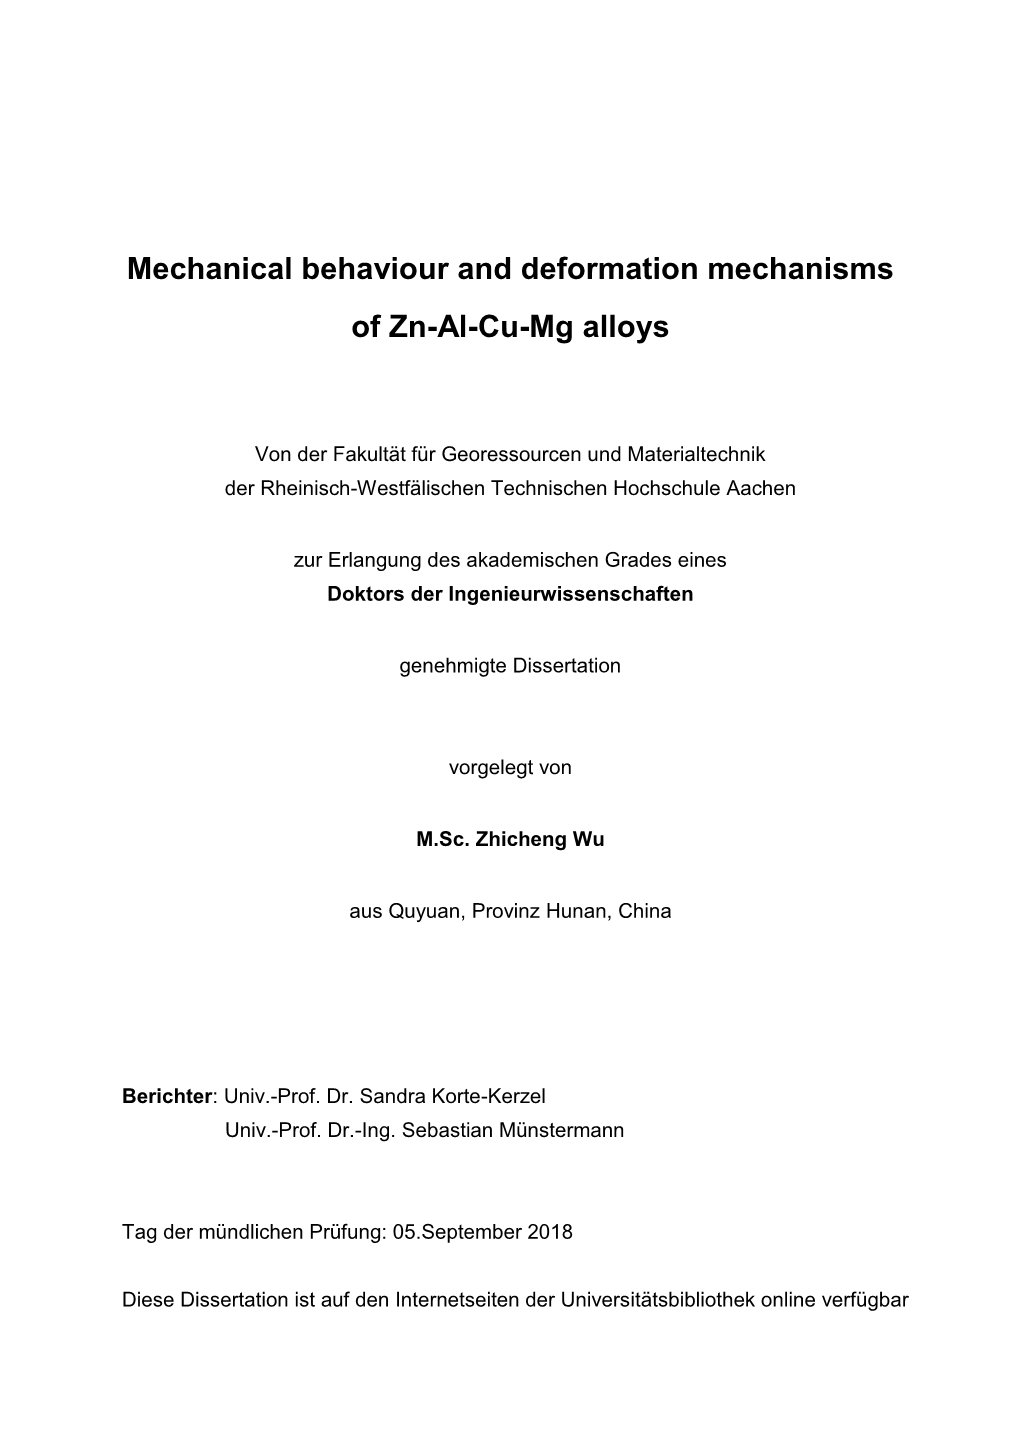 Mechanical Behaviour and Deformation Mechanisms of Zn-Al-Cu-Mg Alloys